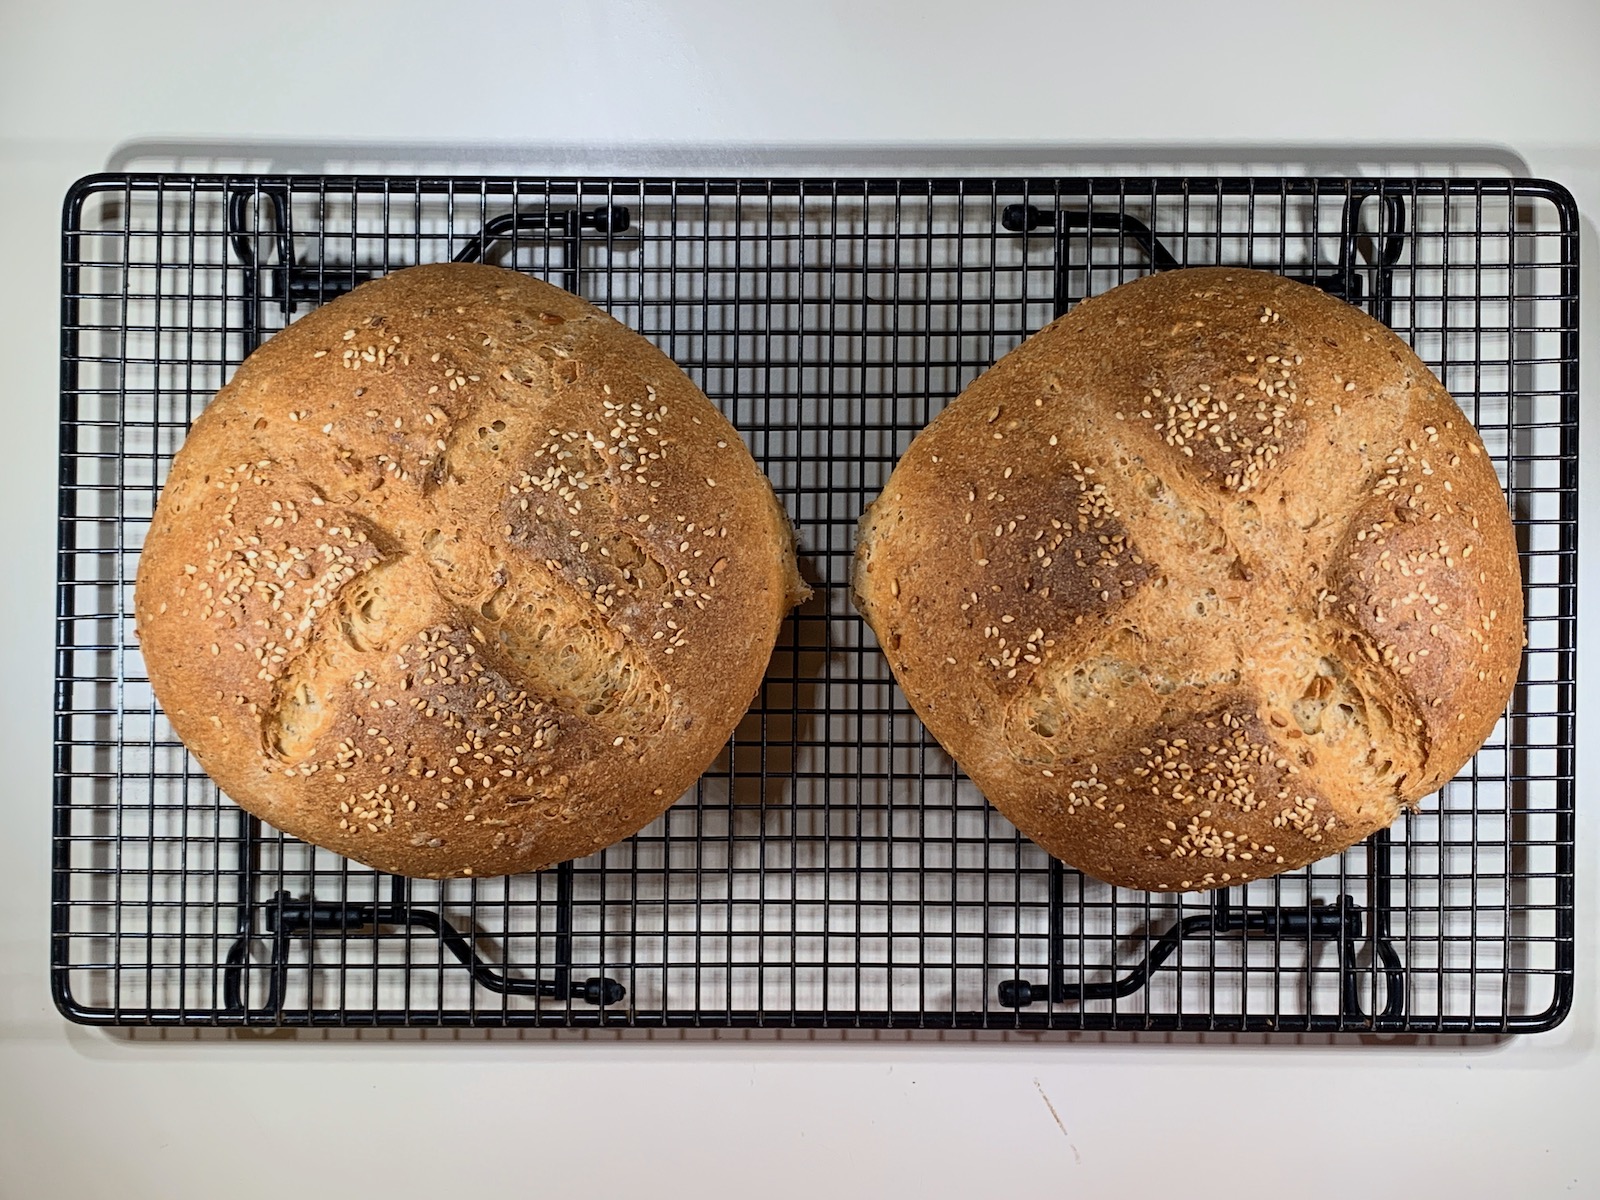 Multigrain Sourdough Bread cooling on rack